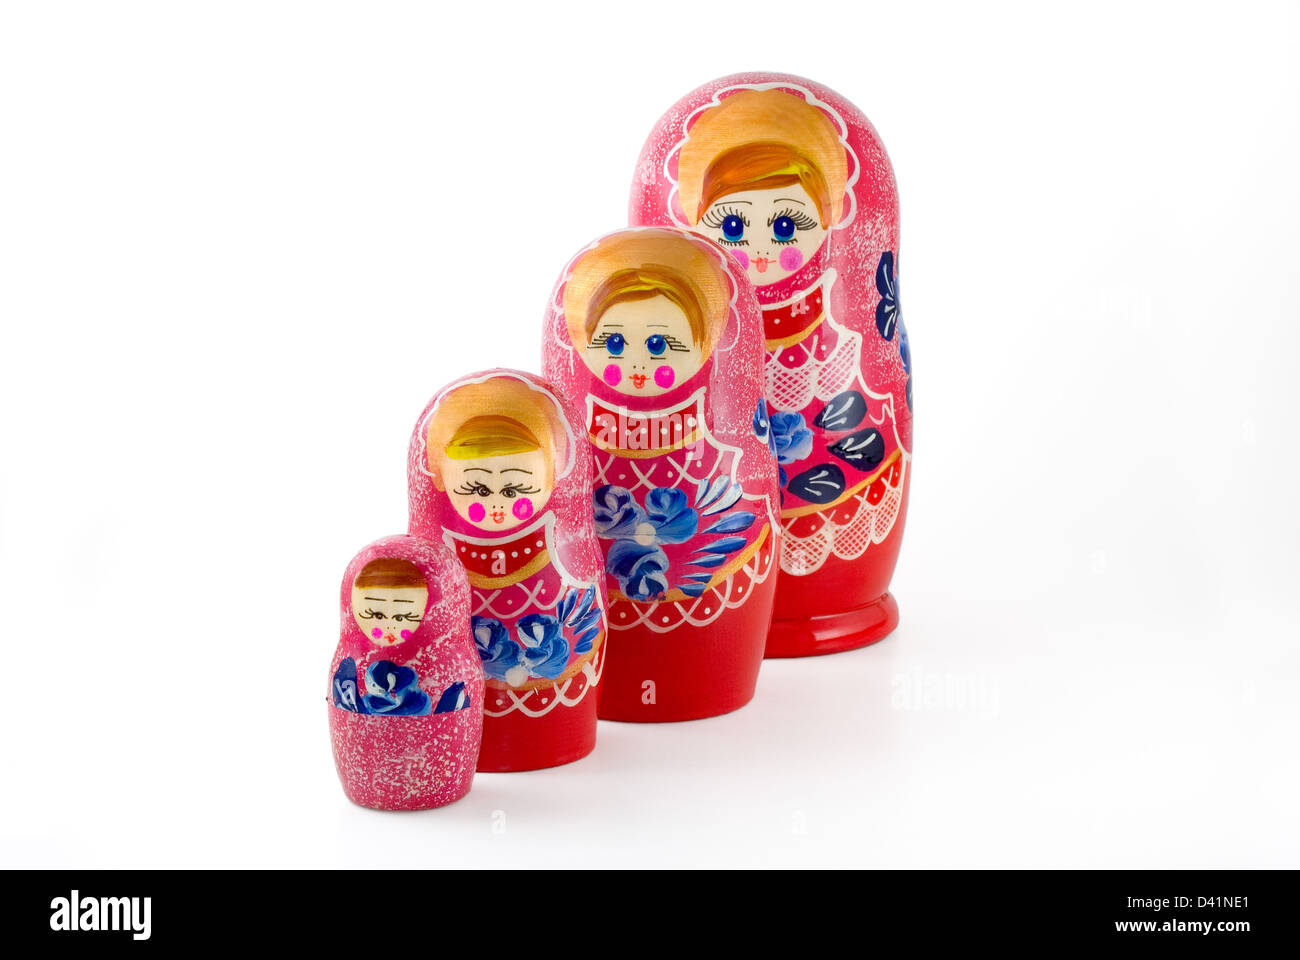 Ruso muñecas anidadas son fotografiadas en blanco Foto de stock